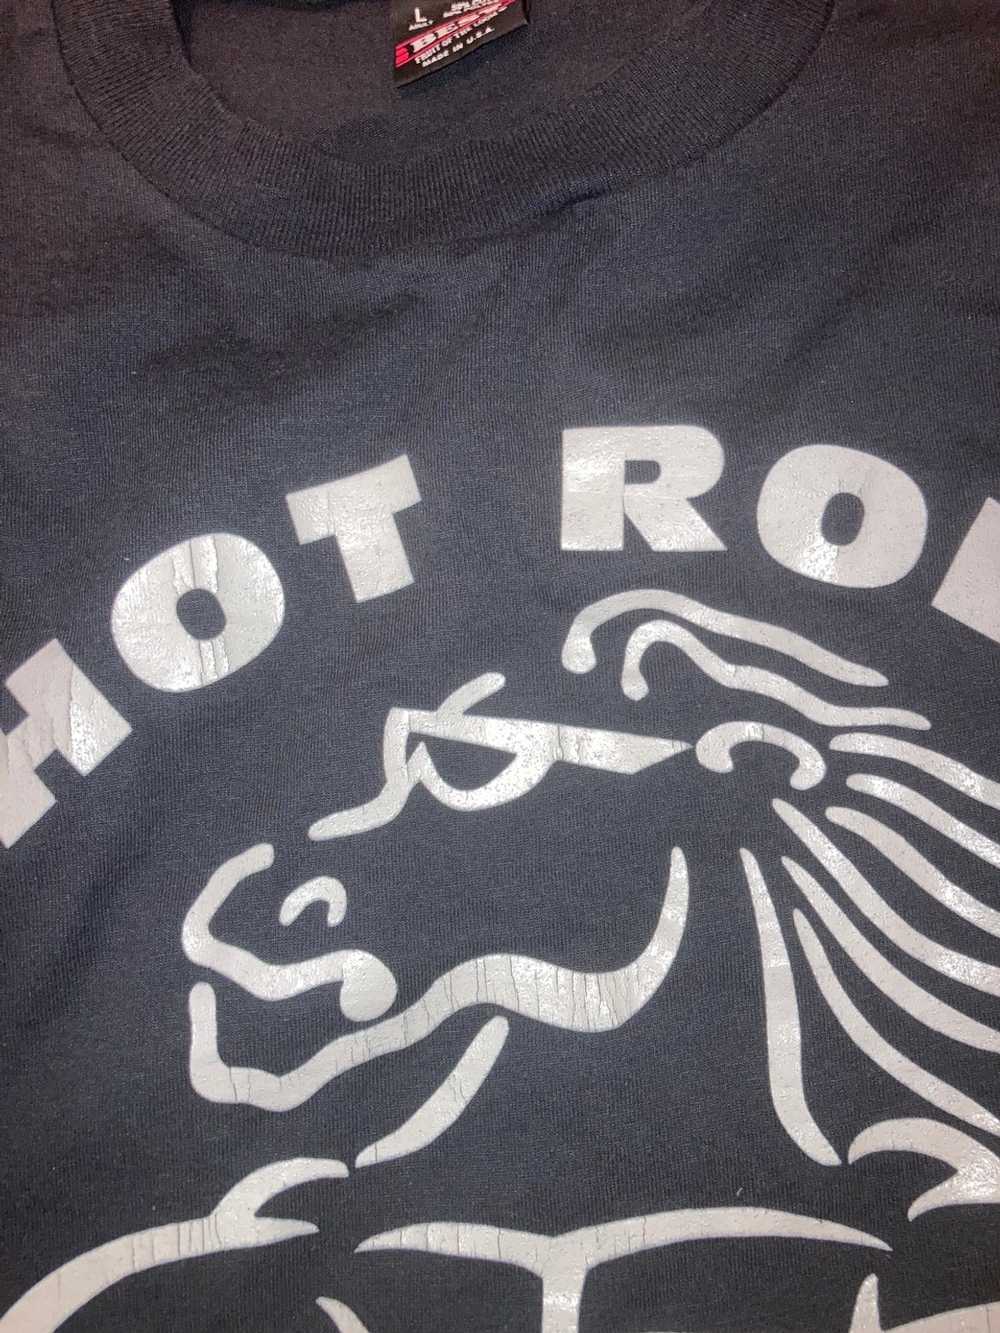 Vintage Hot Rod Horse Power T-Shirt - image 3